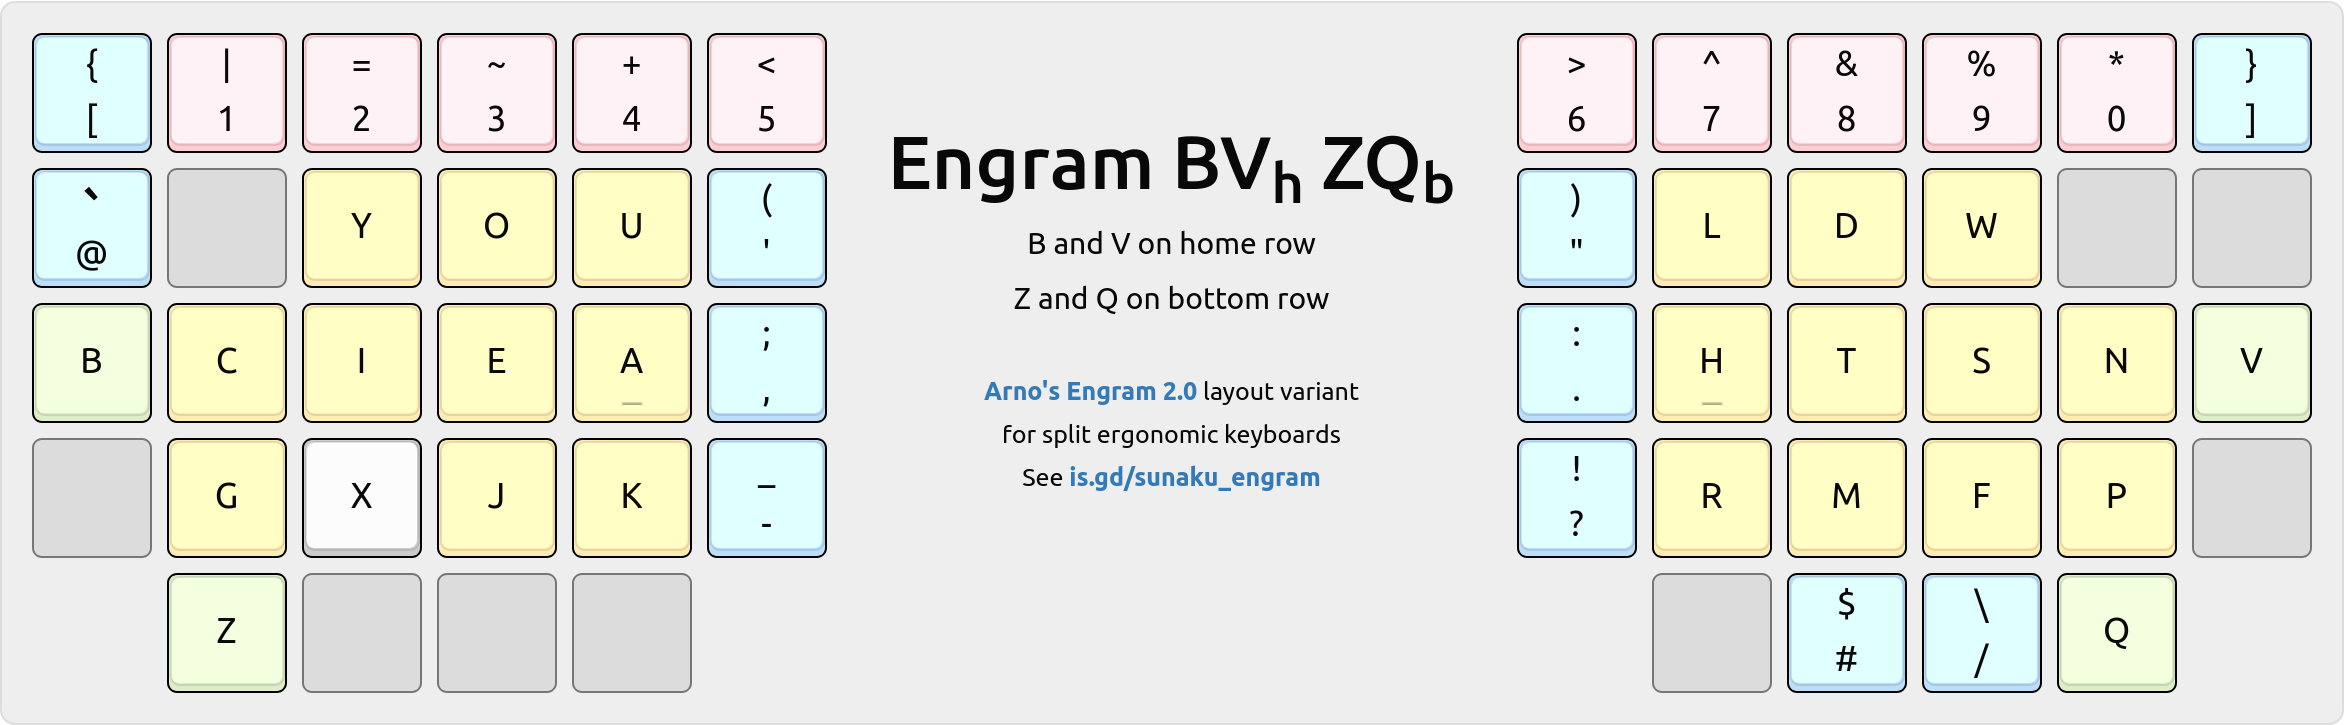 Engram-BVh-ZQb variant